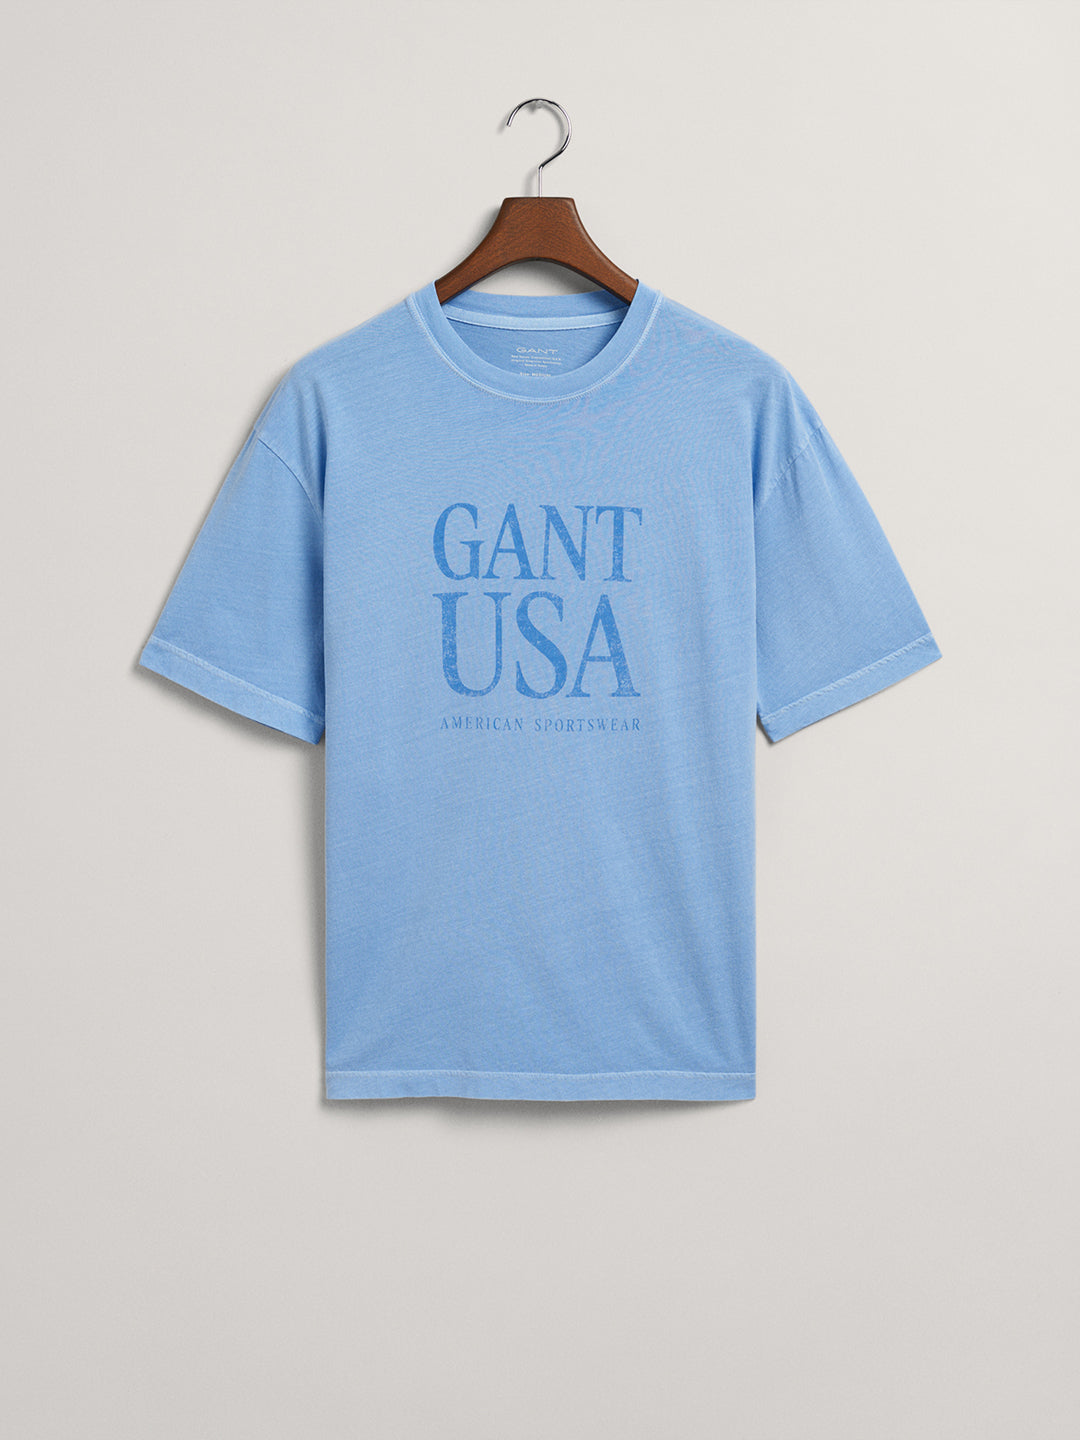 Gant Typography Printed Short Sleeves Cotton T-shirt